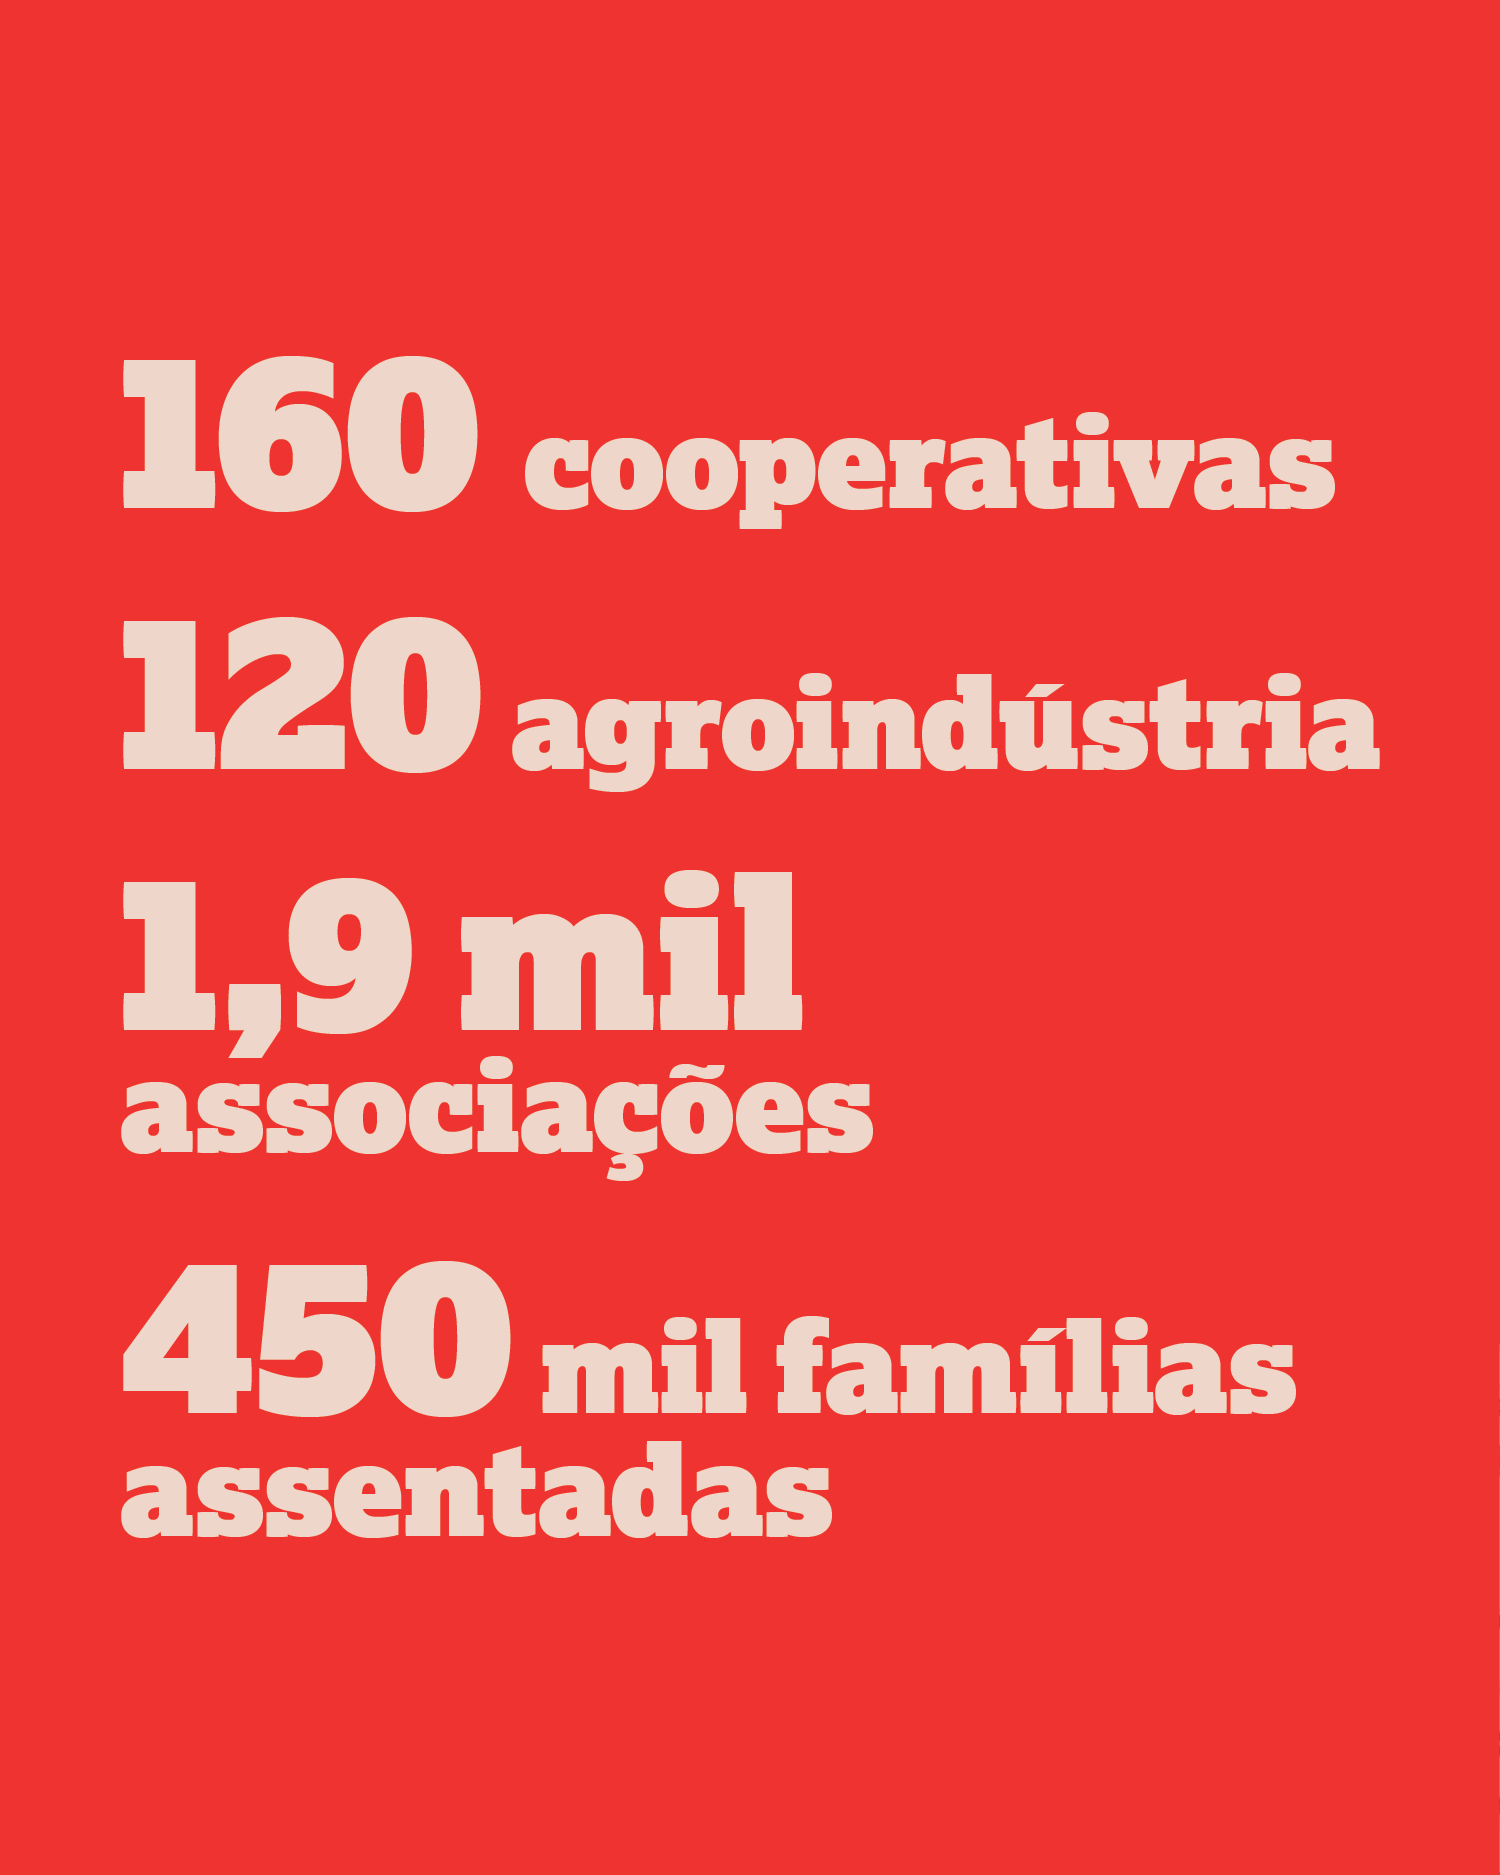 160 cooperativas 120 agroindústria 1,9 mil associações 450 mil famílias assentadas